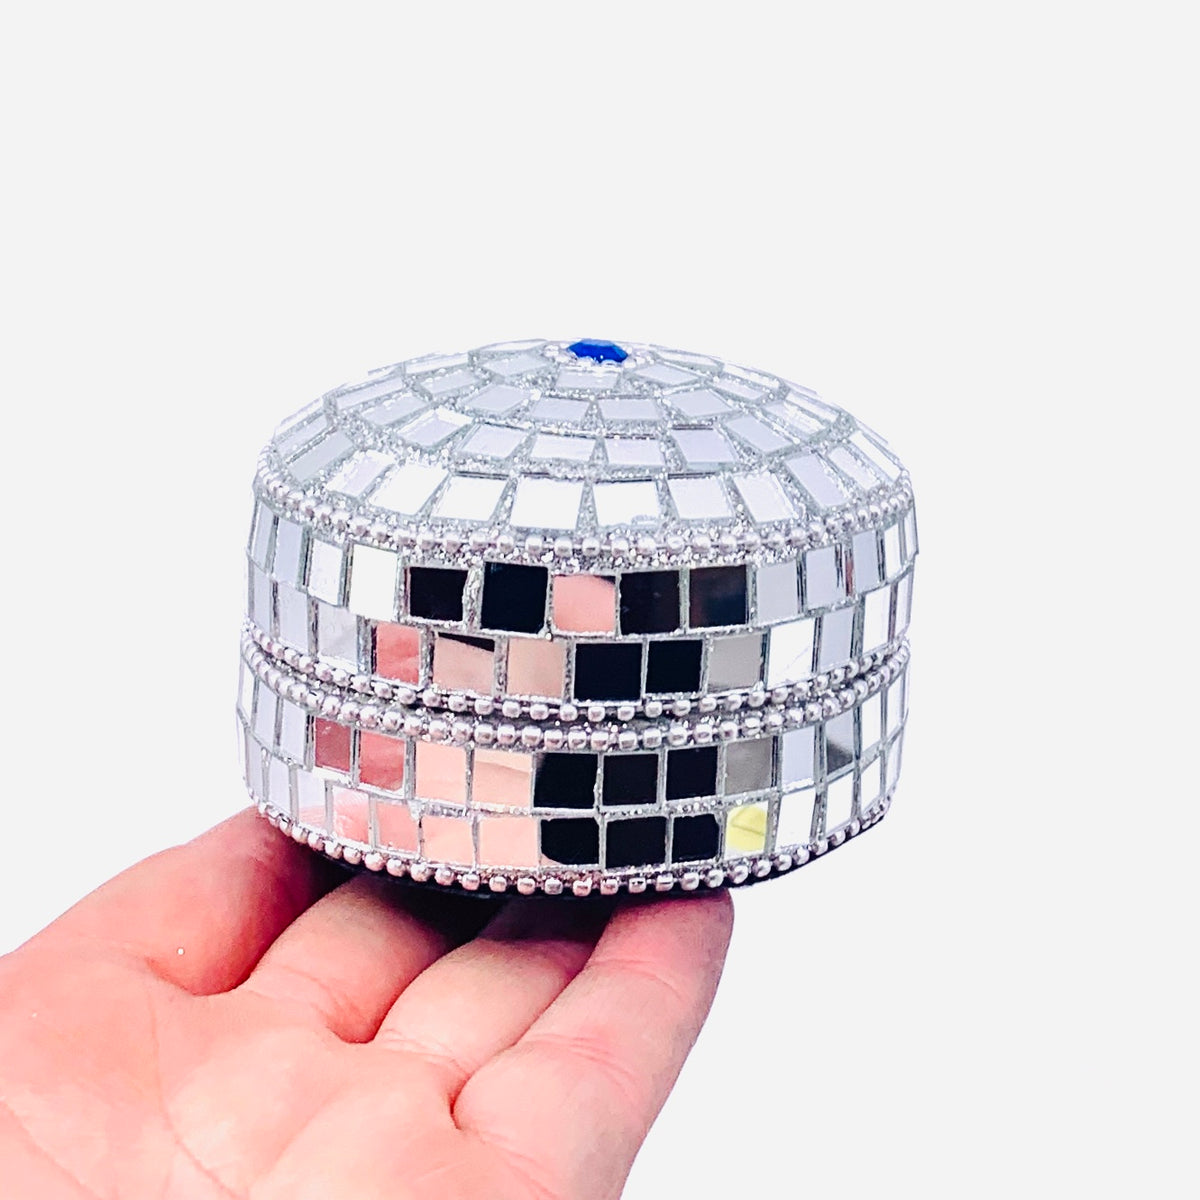 Disco Ball Trinket Box